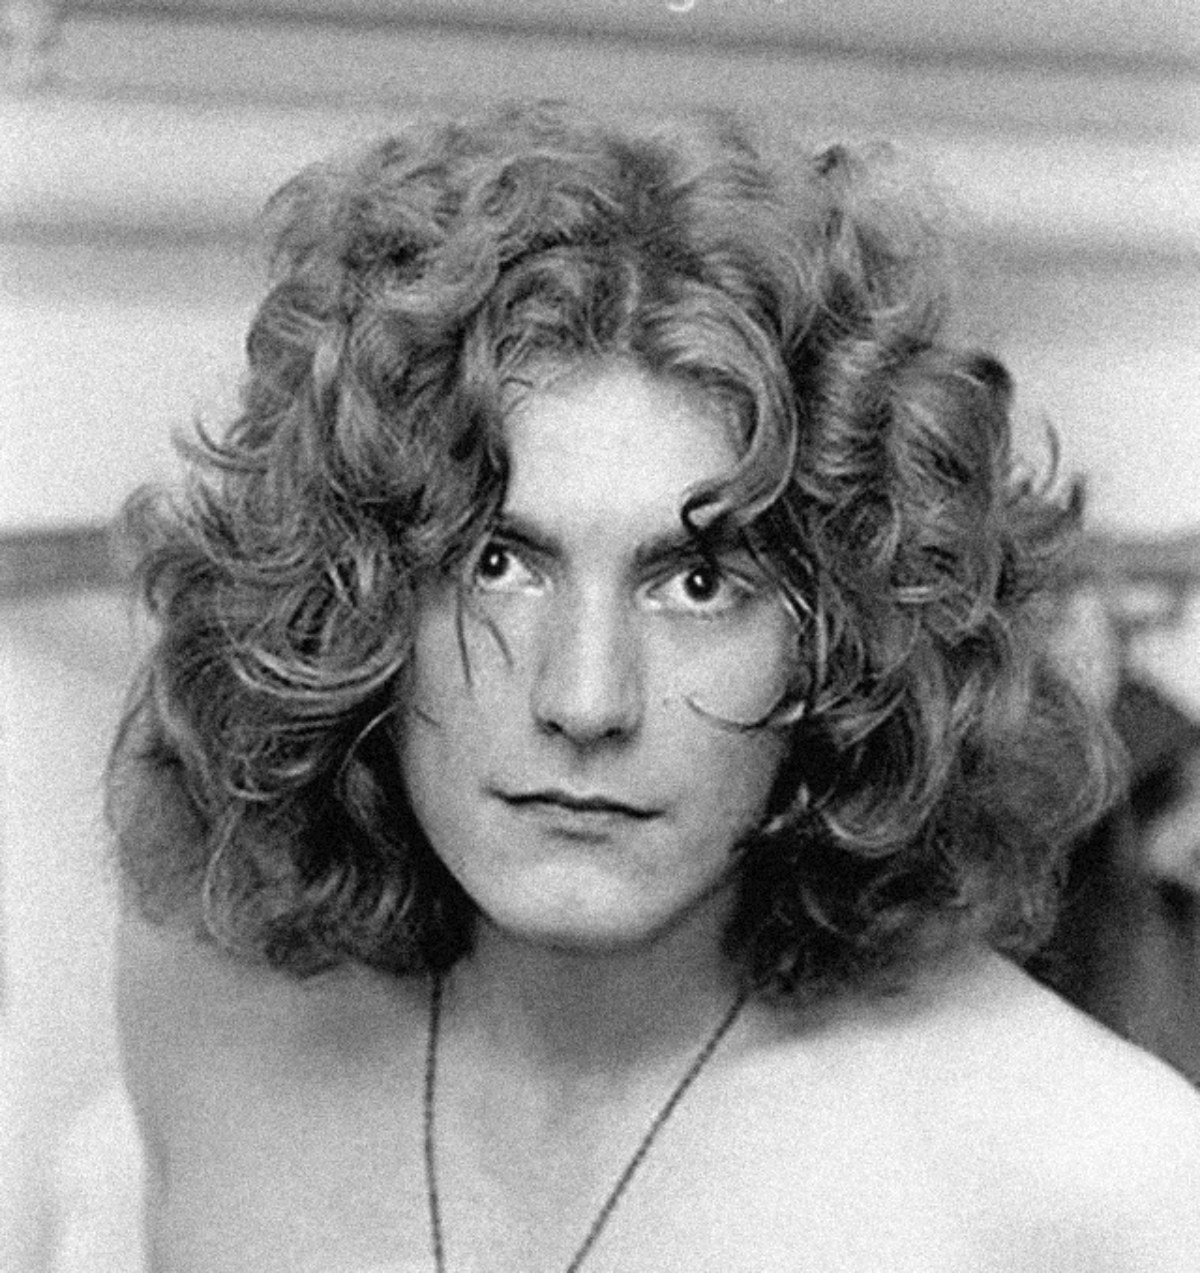 Robert Plant de joven...